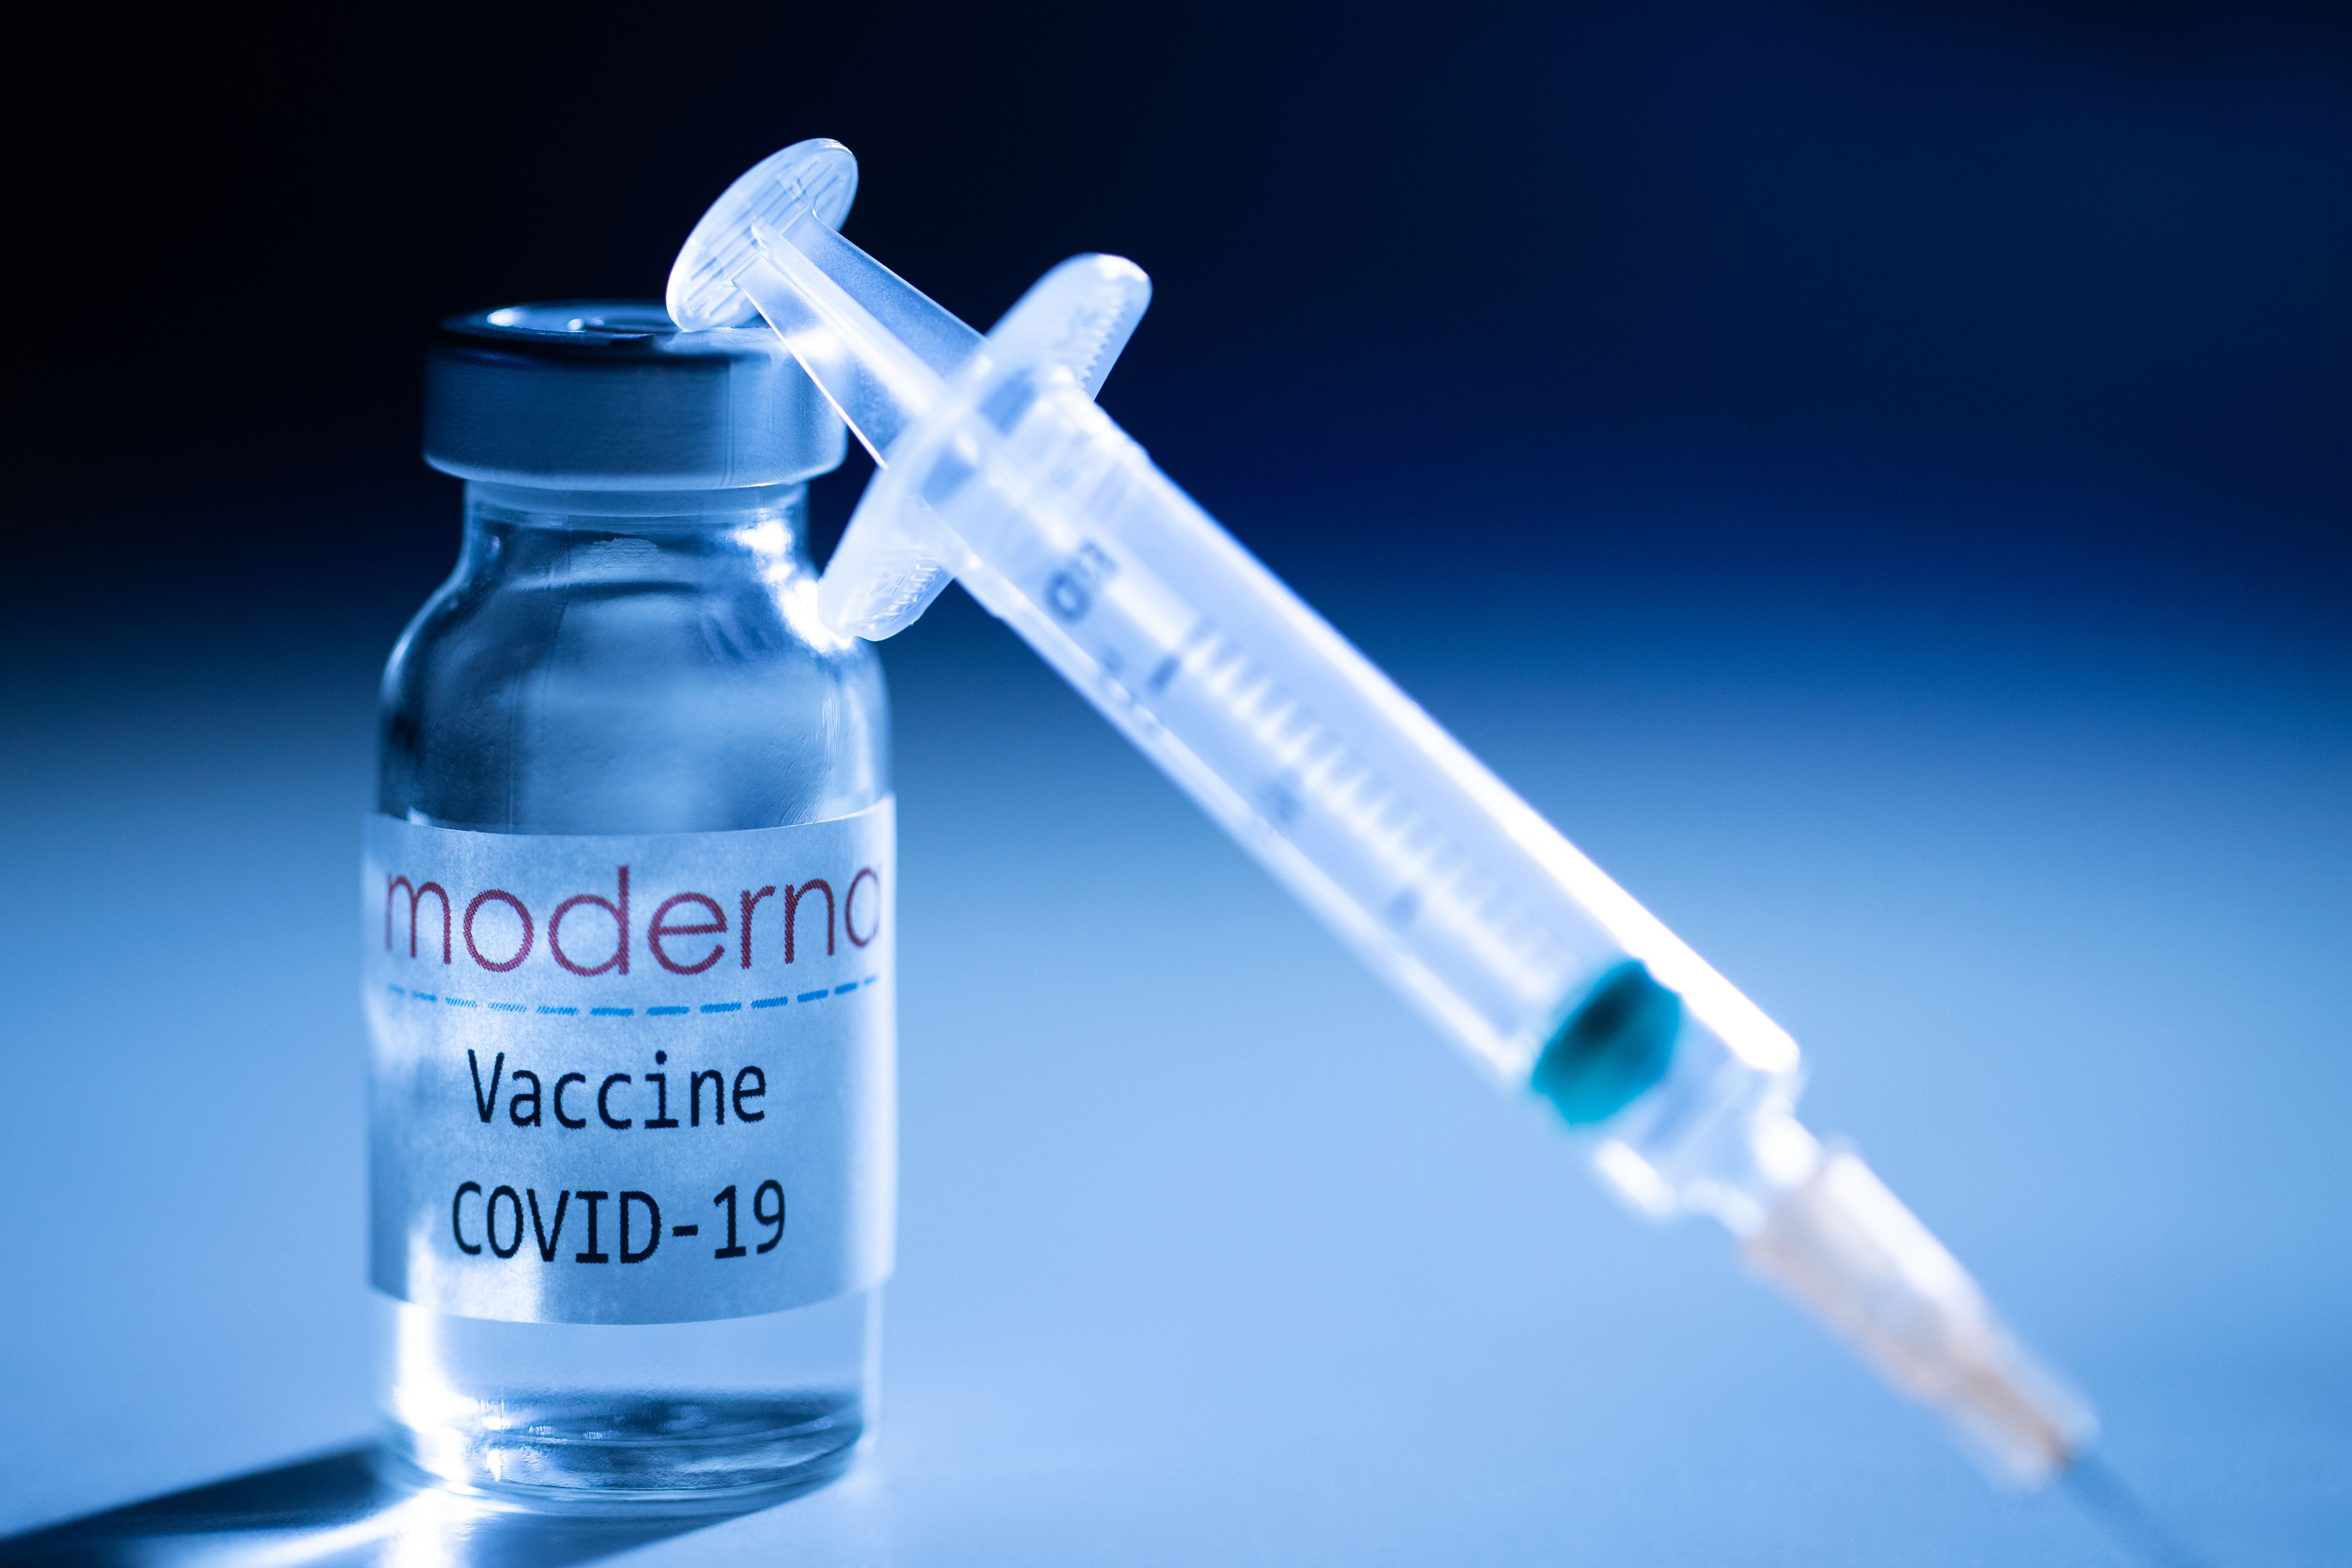 Moderna vaccine country of origin